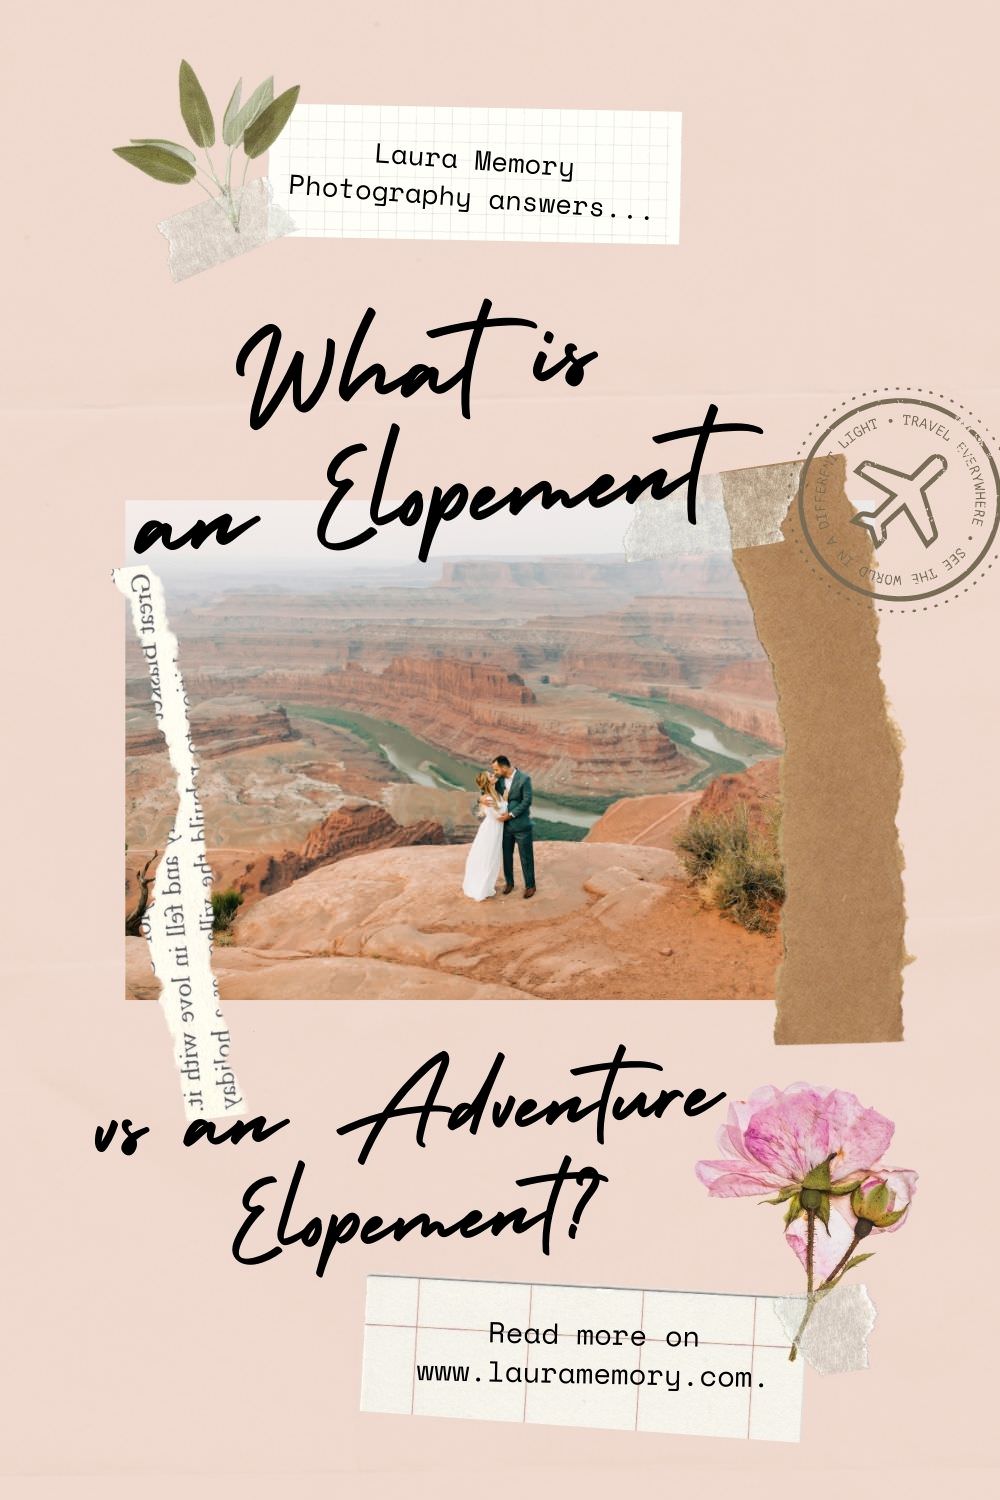 What is an adventure elopement, what is an an elopement?